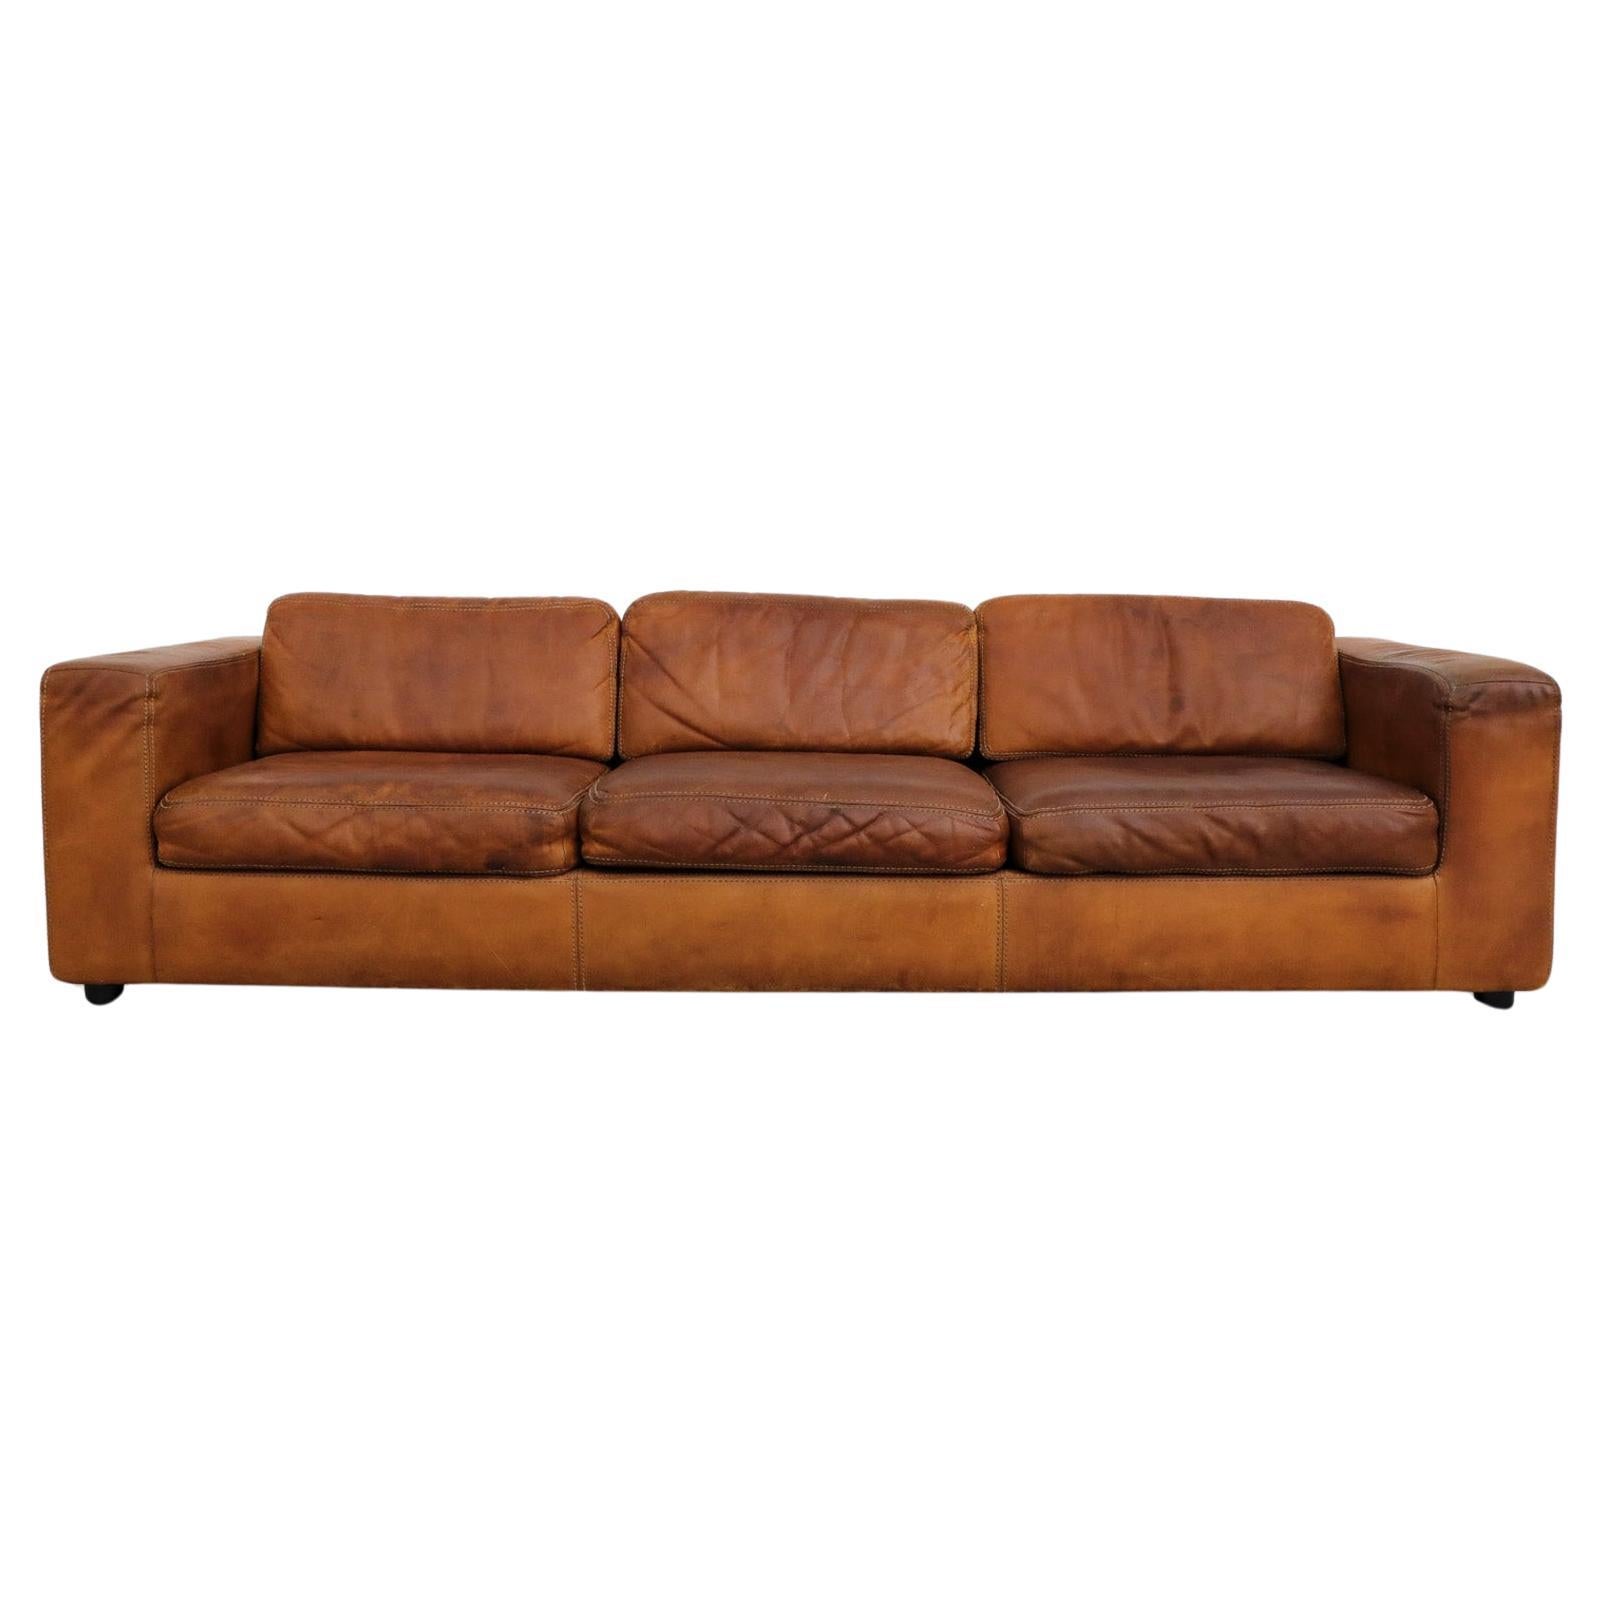 Cognac Buffalo Leder Durlet Dreisitzer-Sofa aus der Mitte des Jahrhunderts